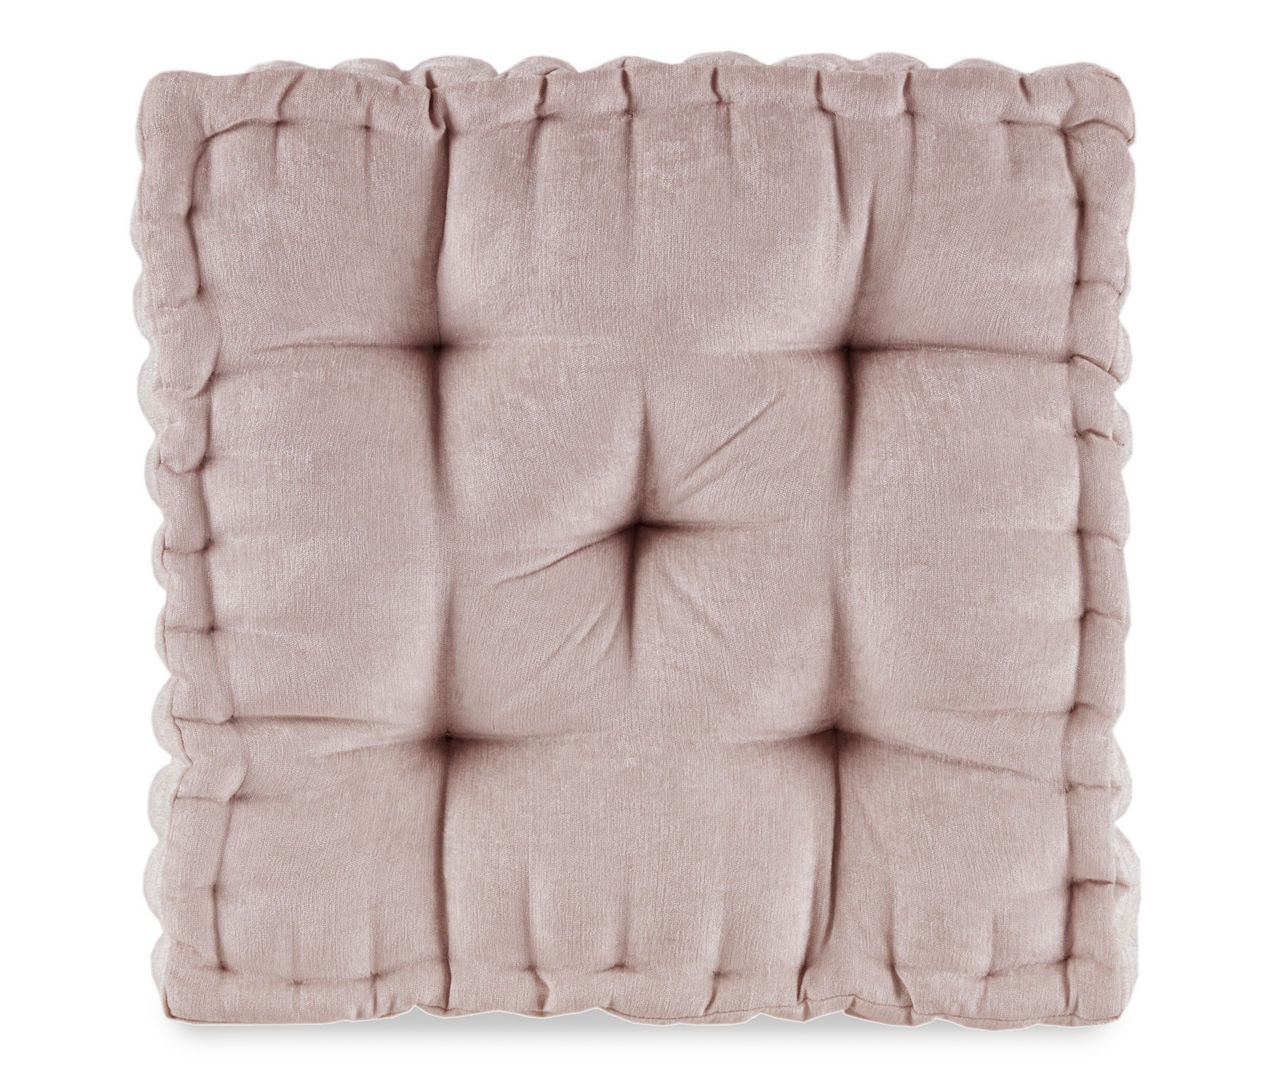 SHAGGY Floor Cushion EXTRA LARGE Size Sitting Soft Floor Pillow